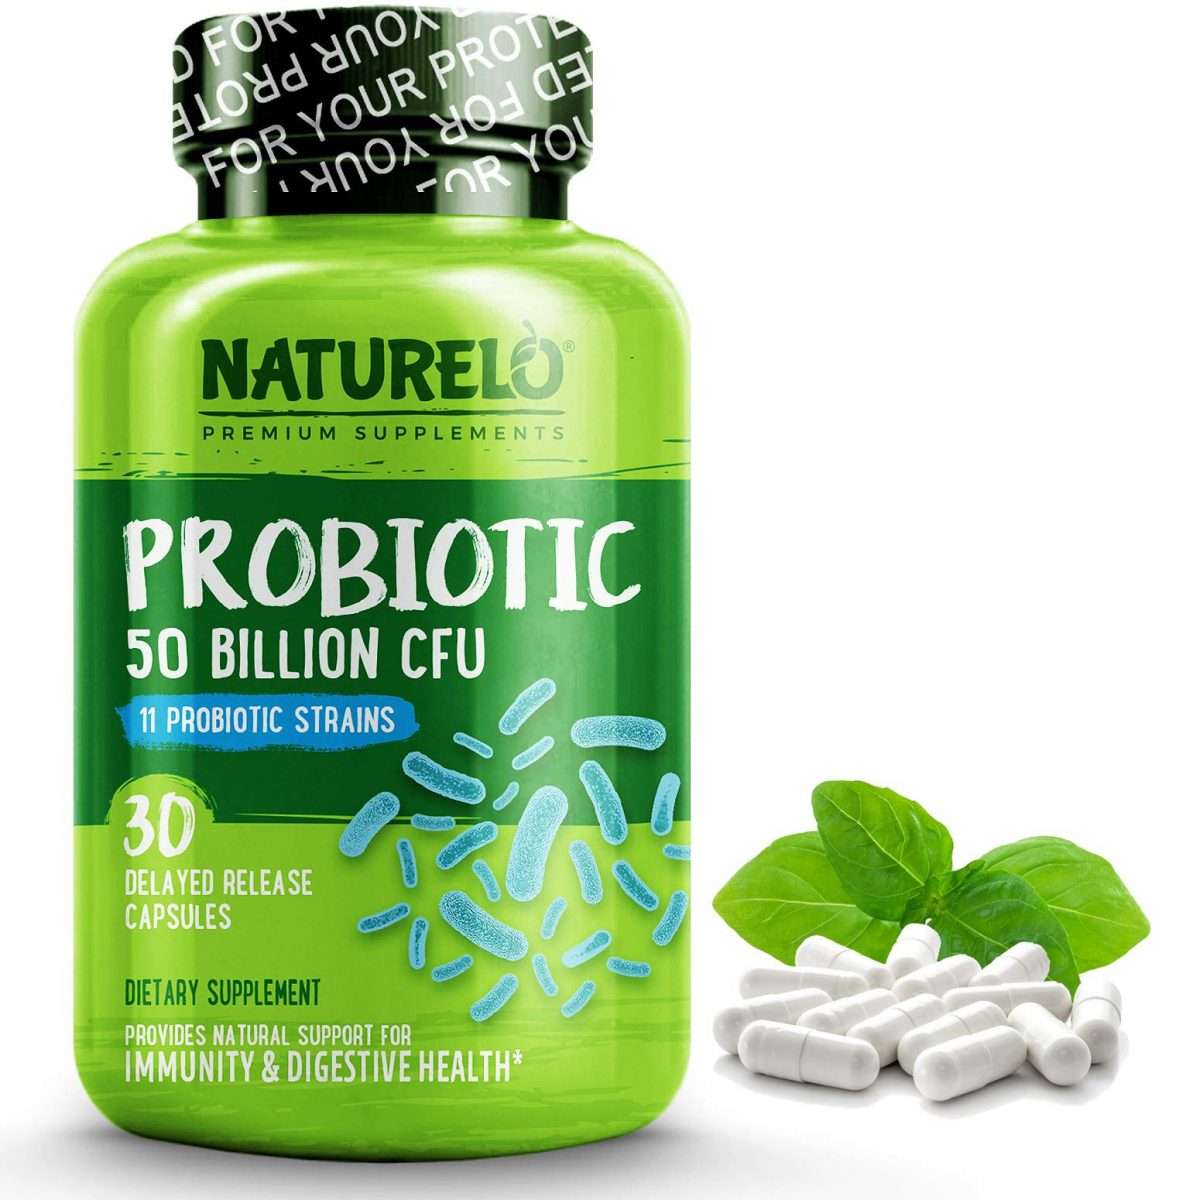 NATURELO Probiotic Supplement